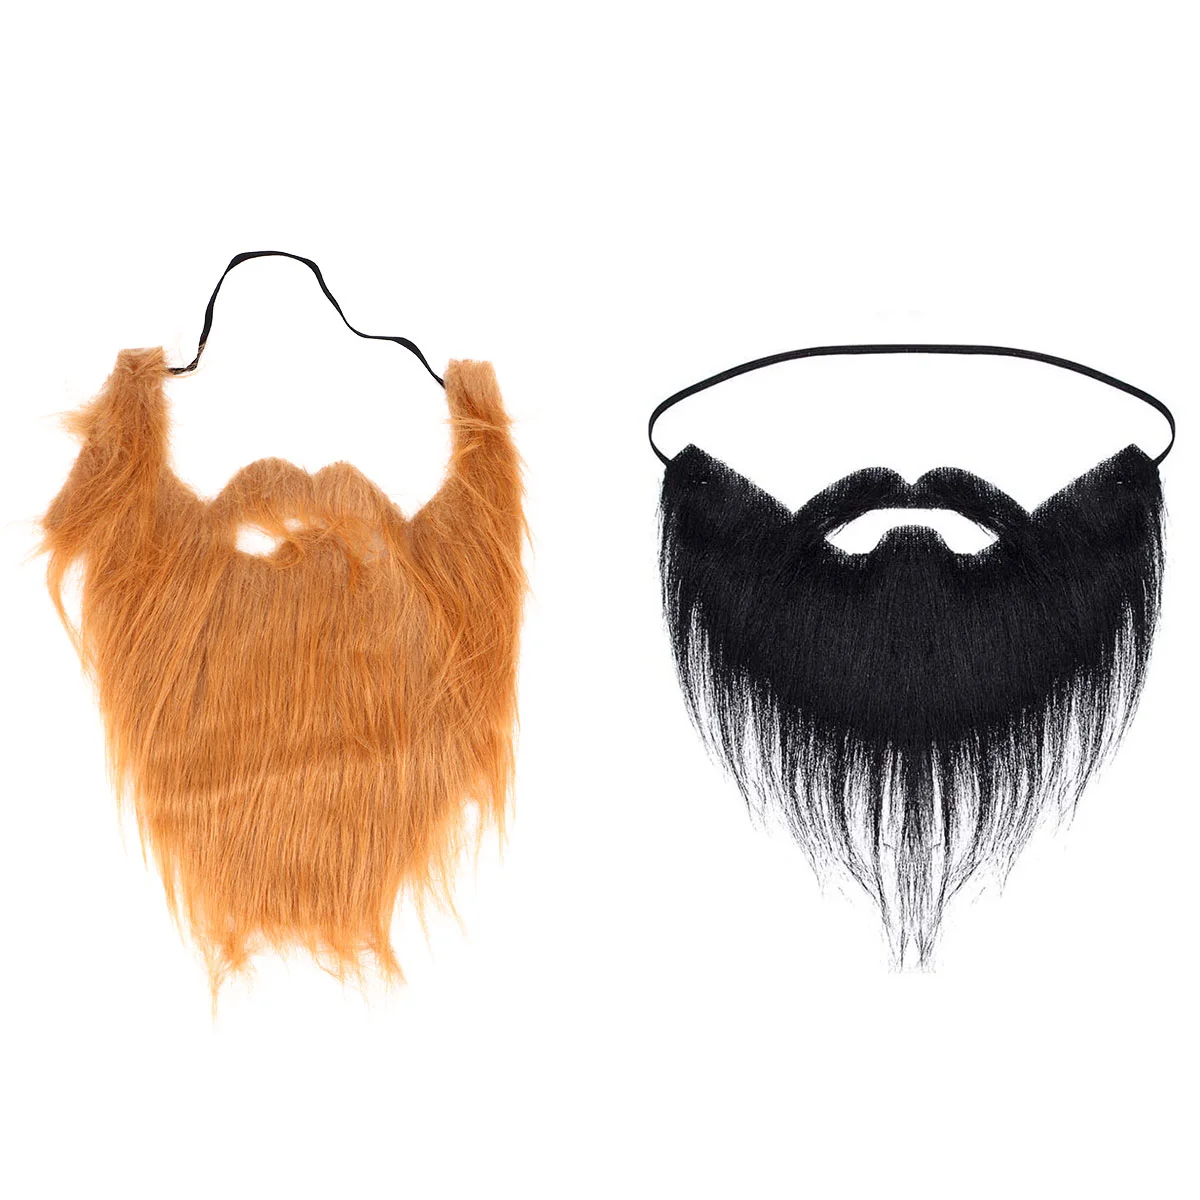 

2 Pcs False Adult Pirate Costume Fake Mustache Whisker Halloween Costumes Men Beard Party Supplies